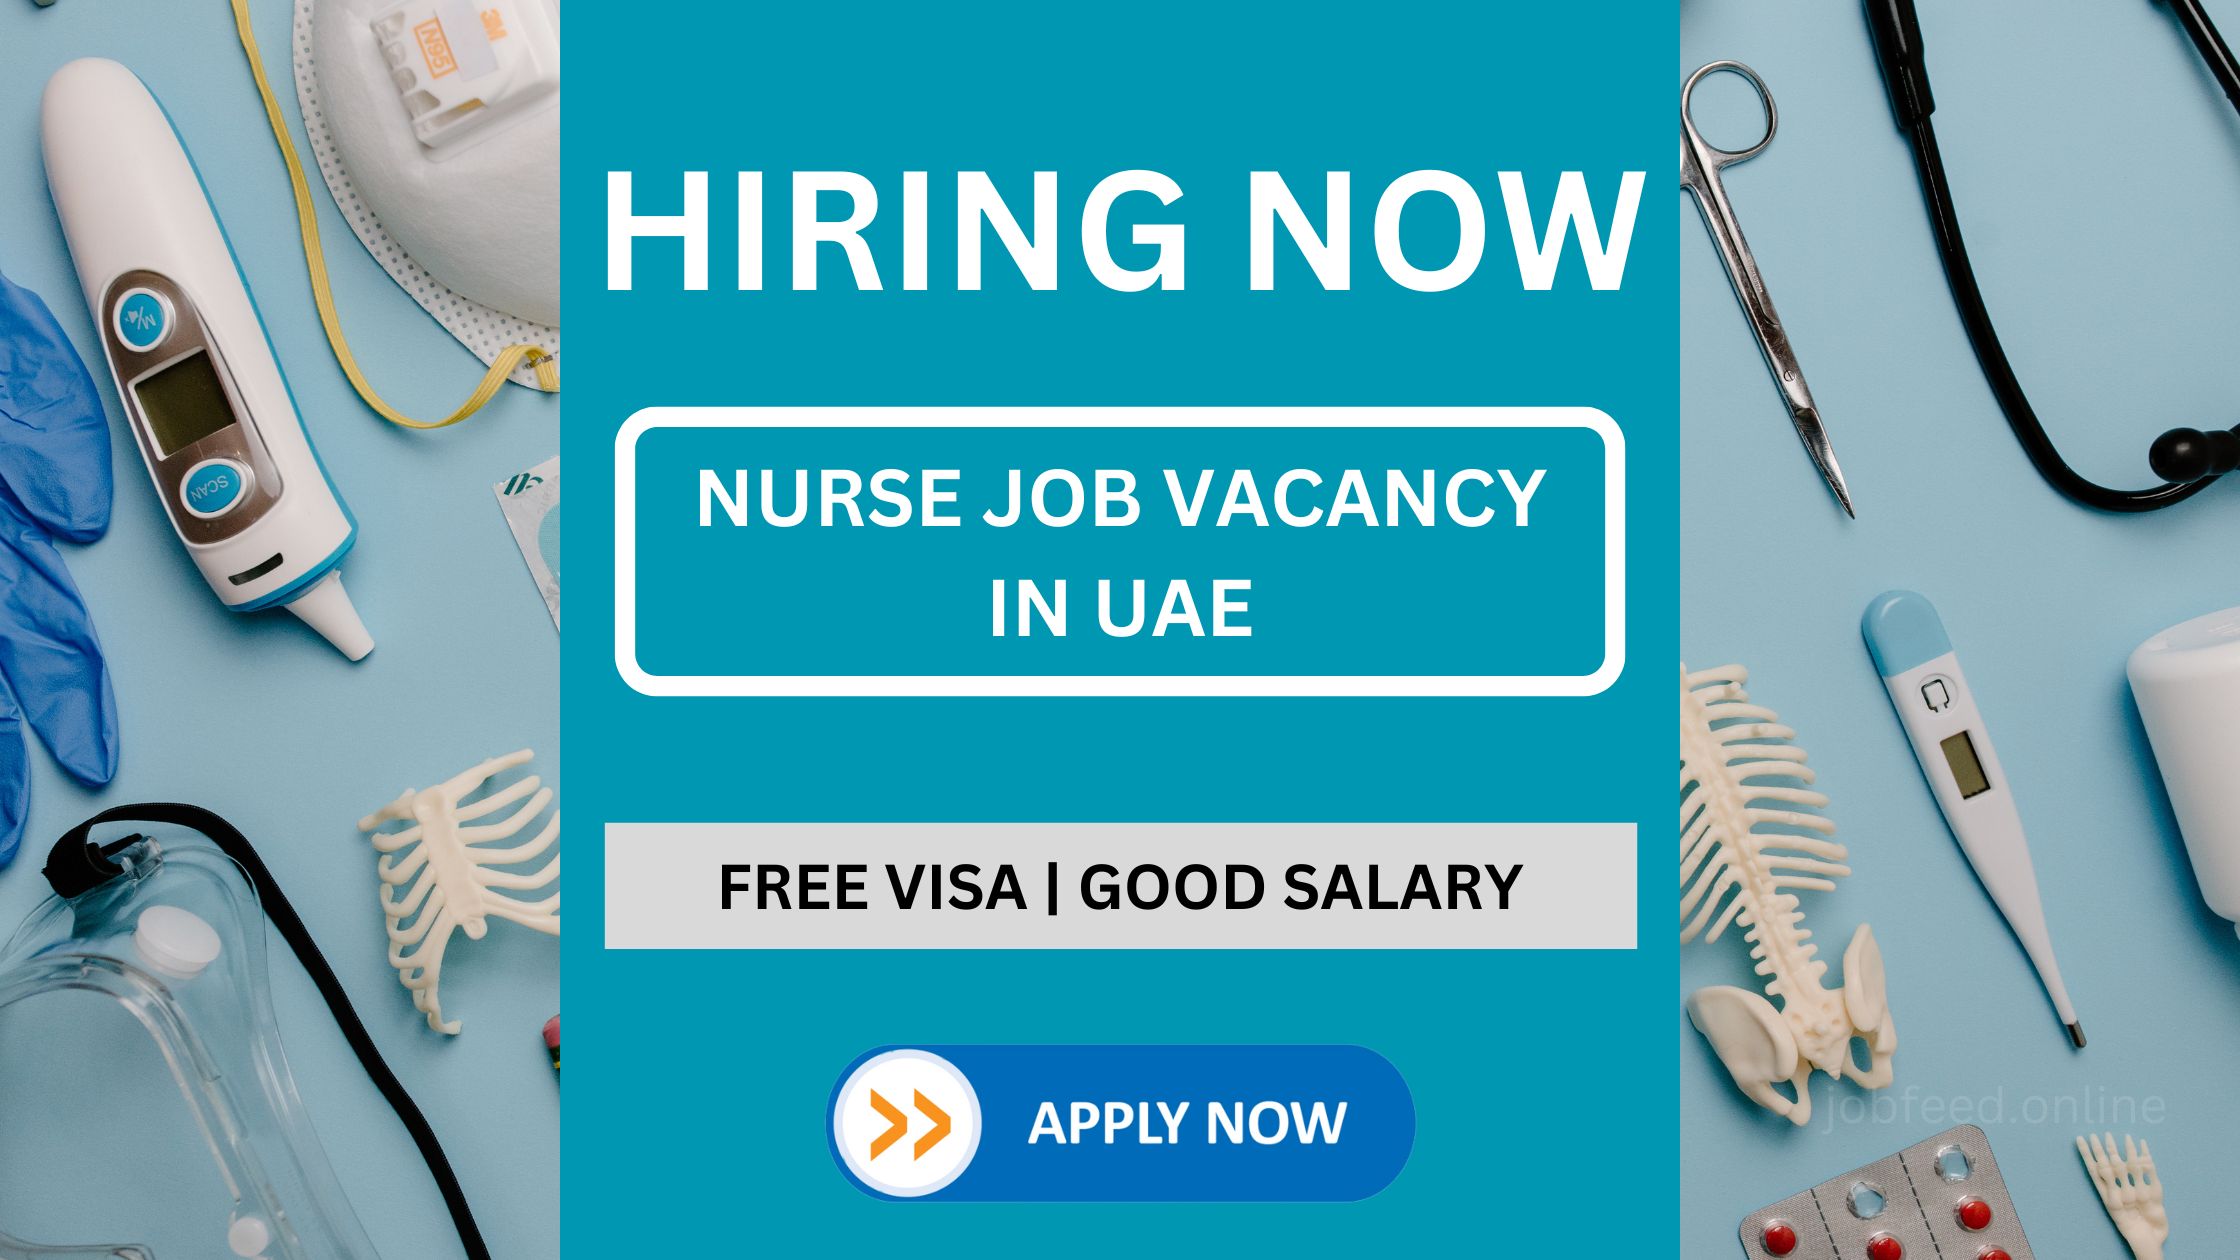 NURSE JOB VACANCY IN UAE